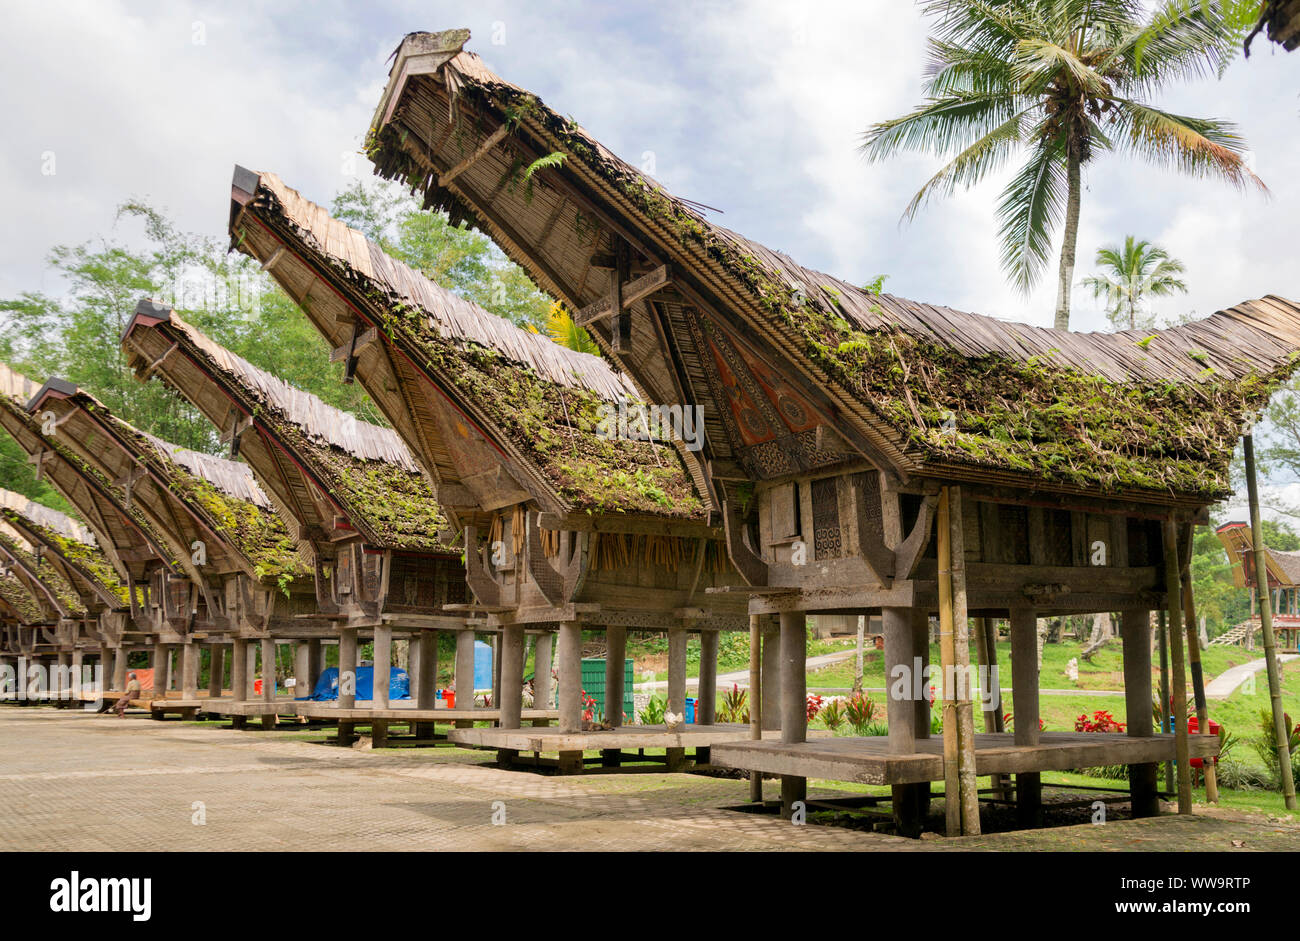 Traditional Rice barns, Kete Kesu, Toraja, Sulawesi, Indonesia Stock Photo